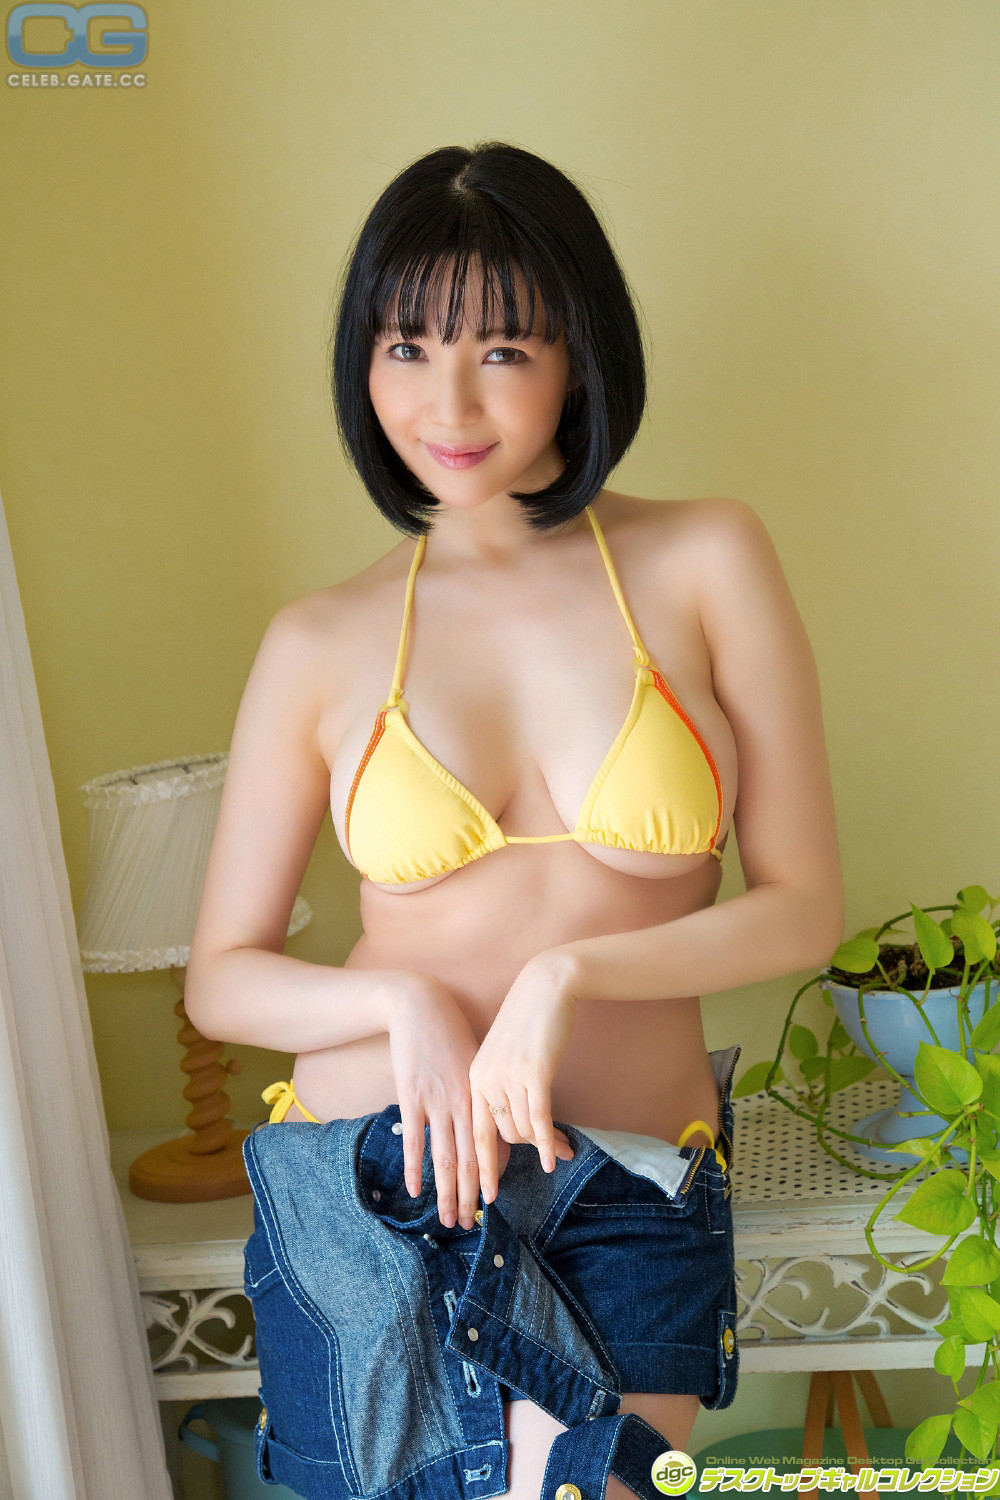 Yuuri Morishita nude, pictures, photos, Playboy, naked, topless, fappening